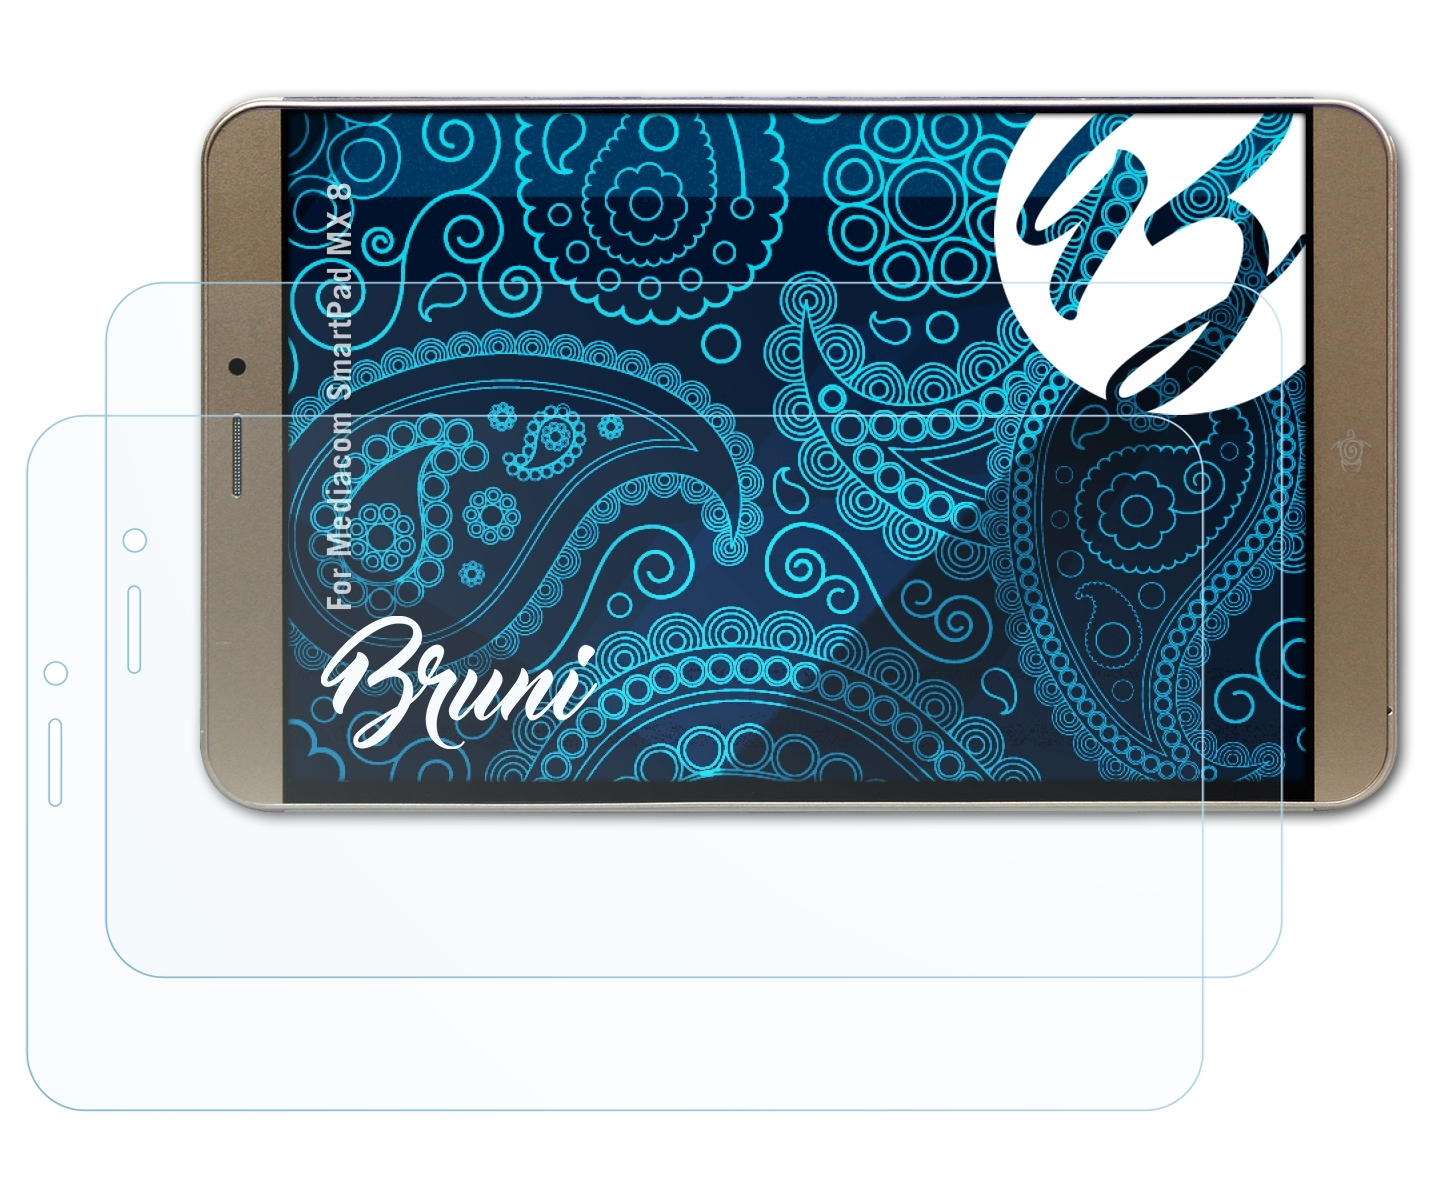 BRUNI 2x Basics-Clear SmartPad Mediacom MX 8) Schutzfolie(für